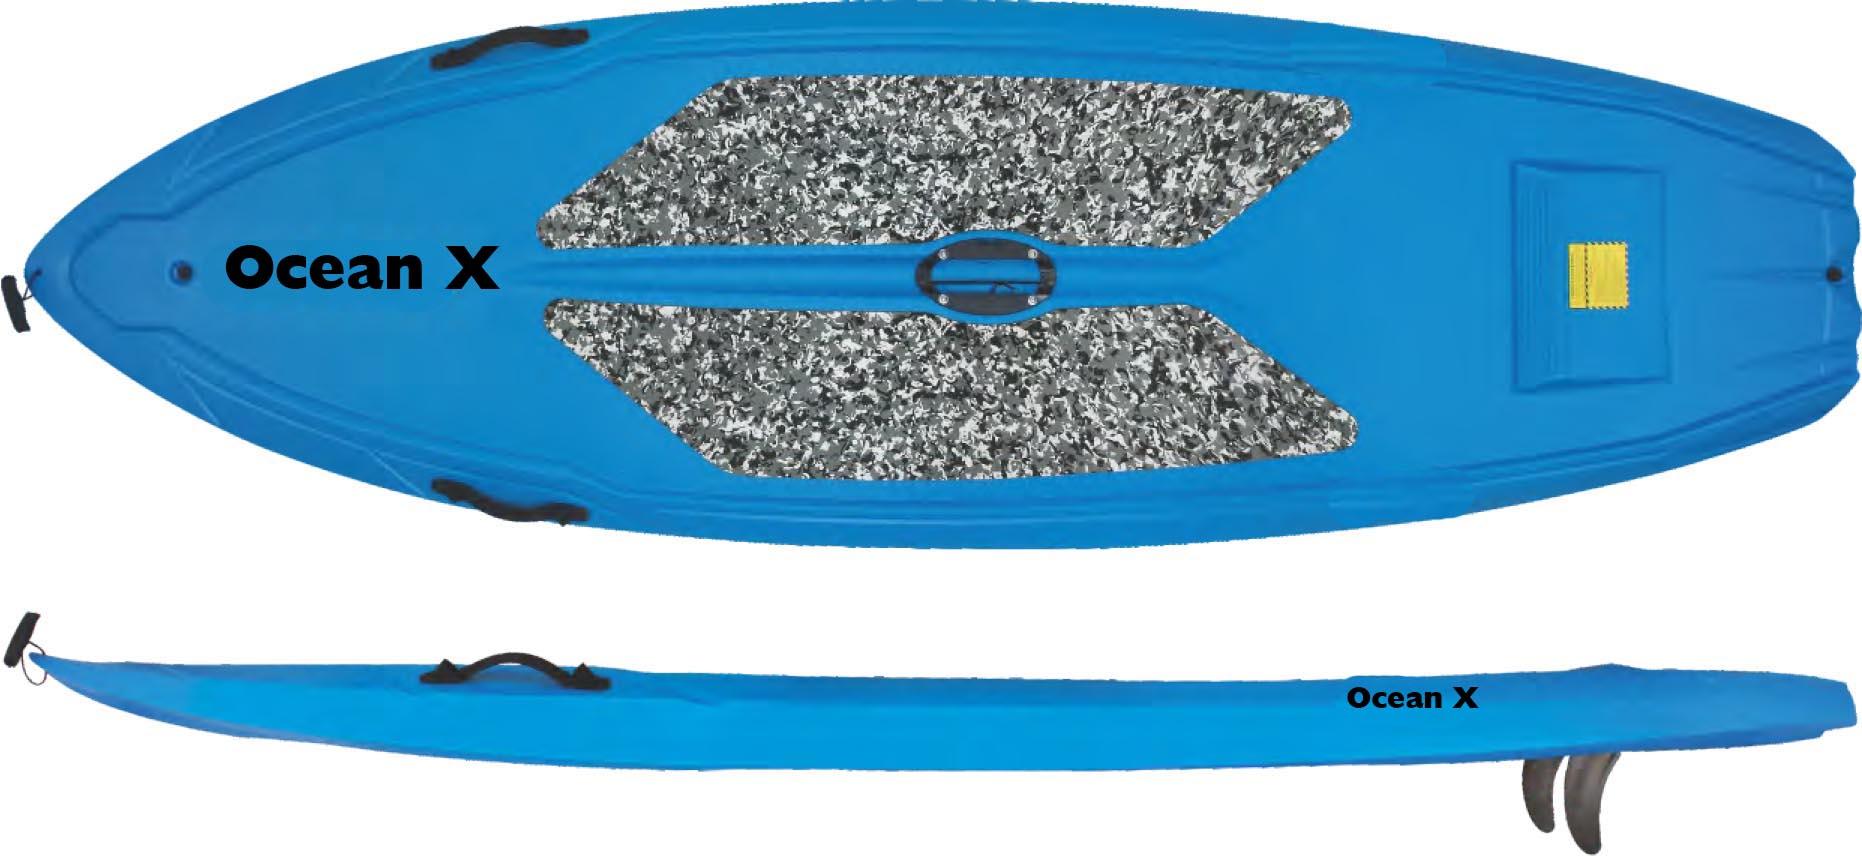 Ocean X Adult Paddle Board,Blue